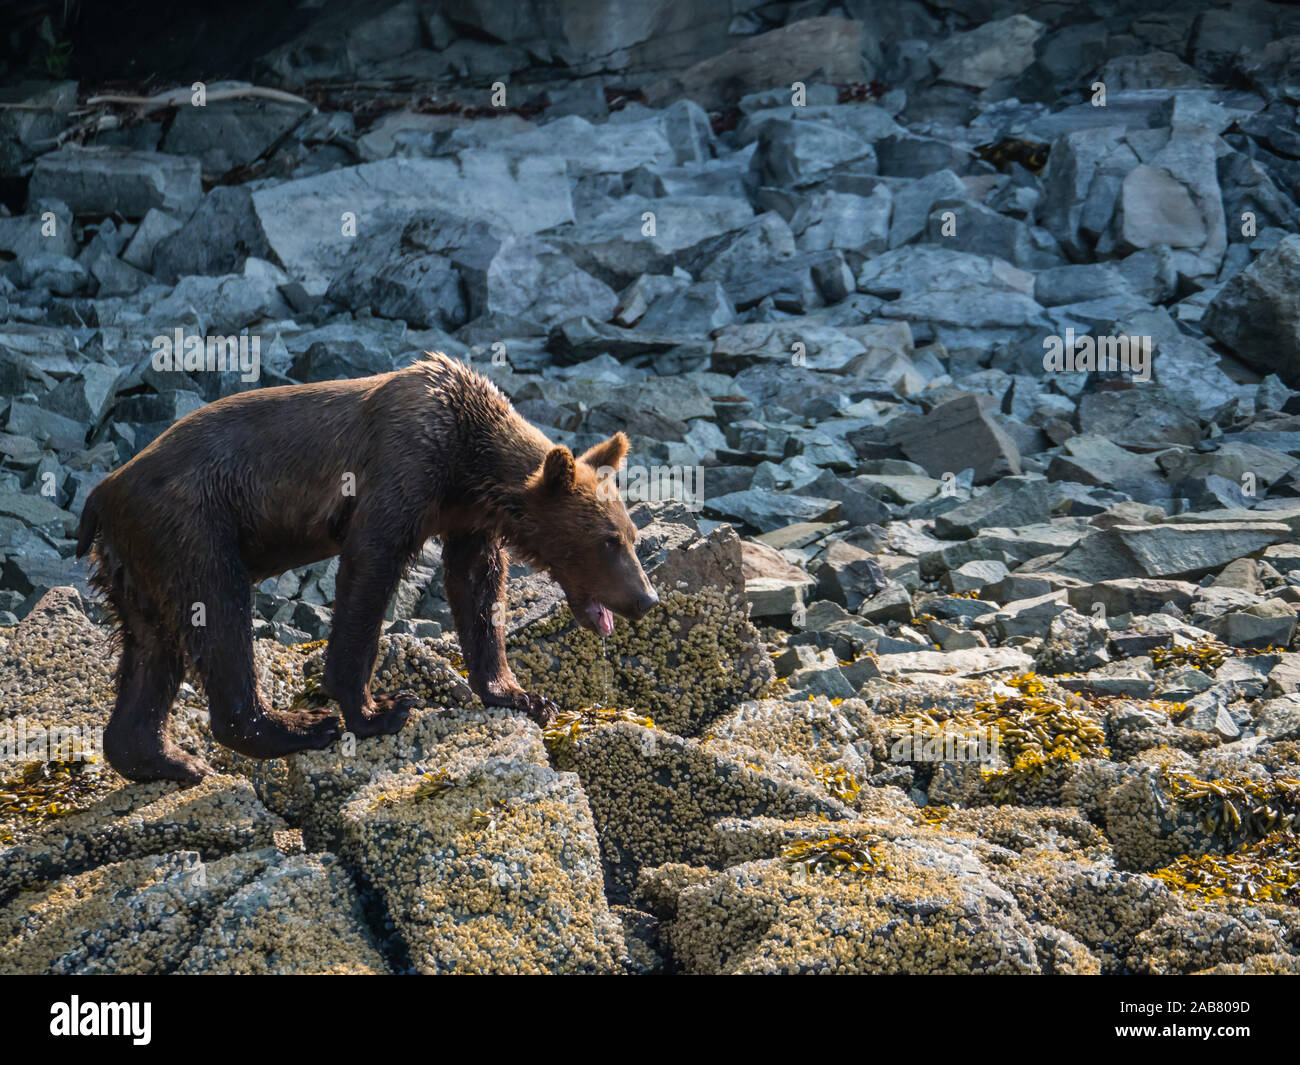 An young brown bear (Ursus arctos), in Geographic Harbor, Katmai National Park, Alaska, North America Stock Photo